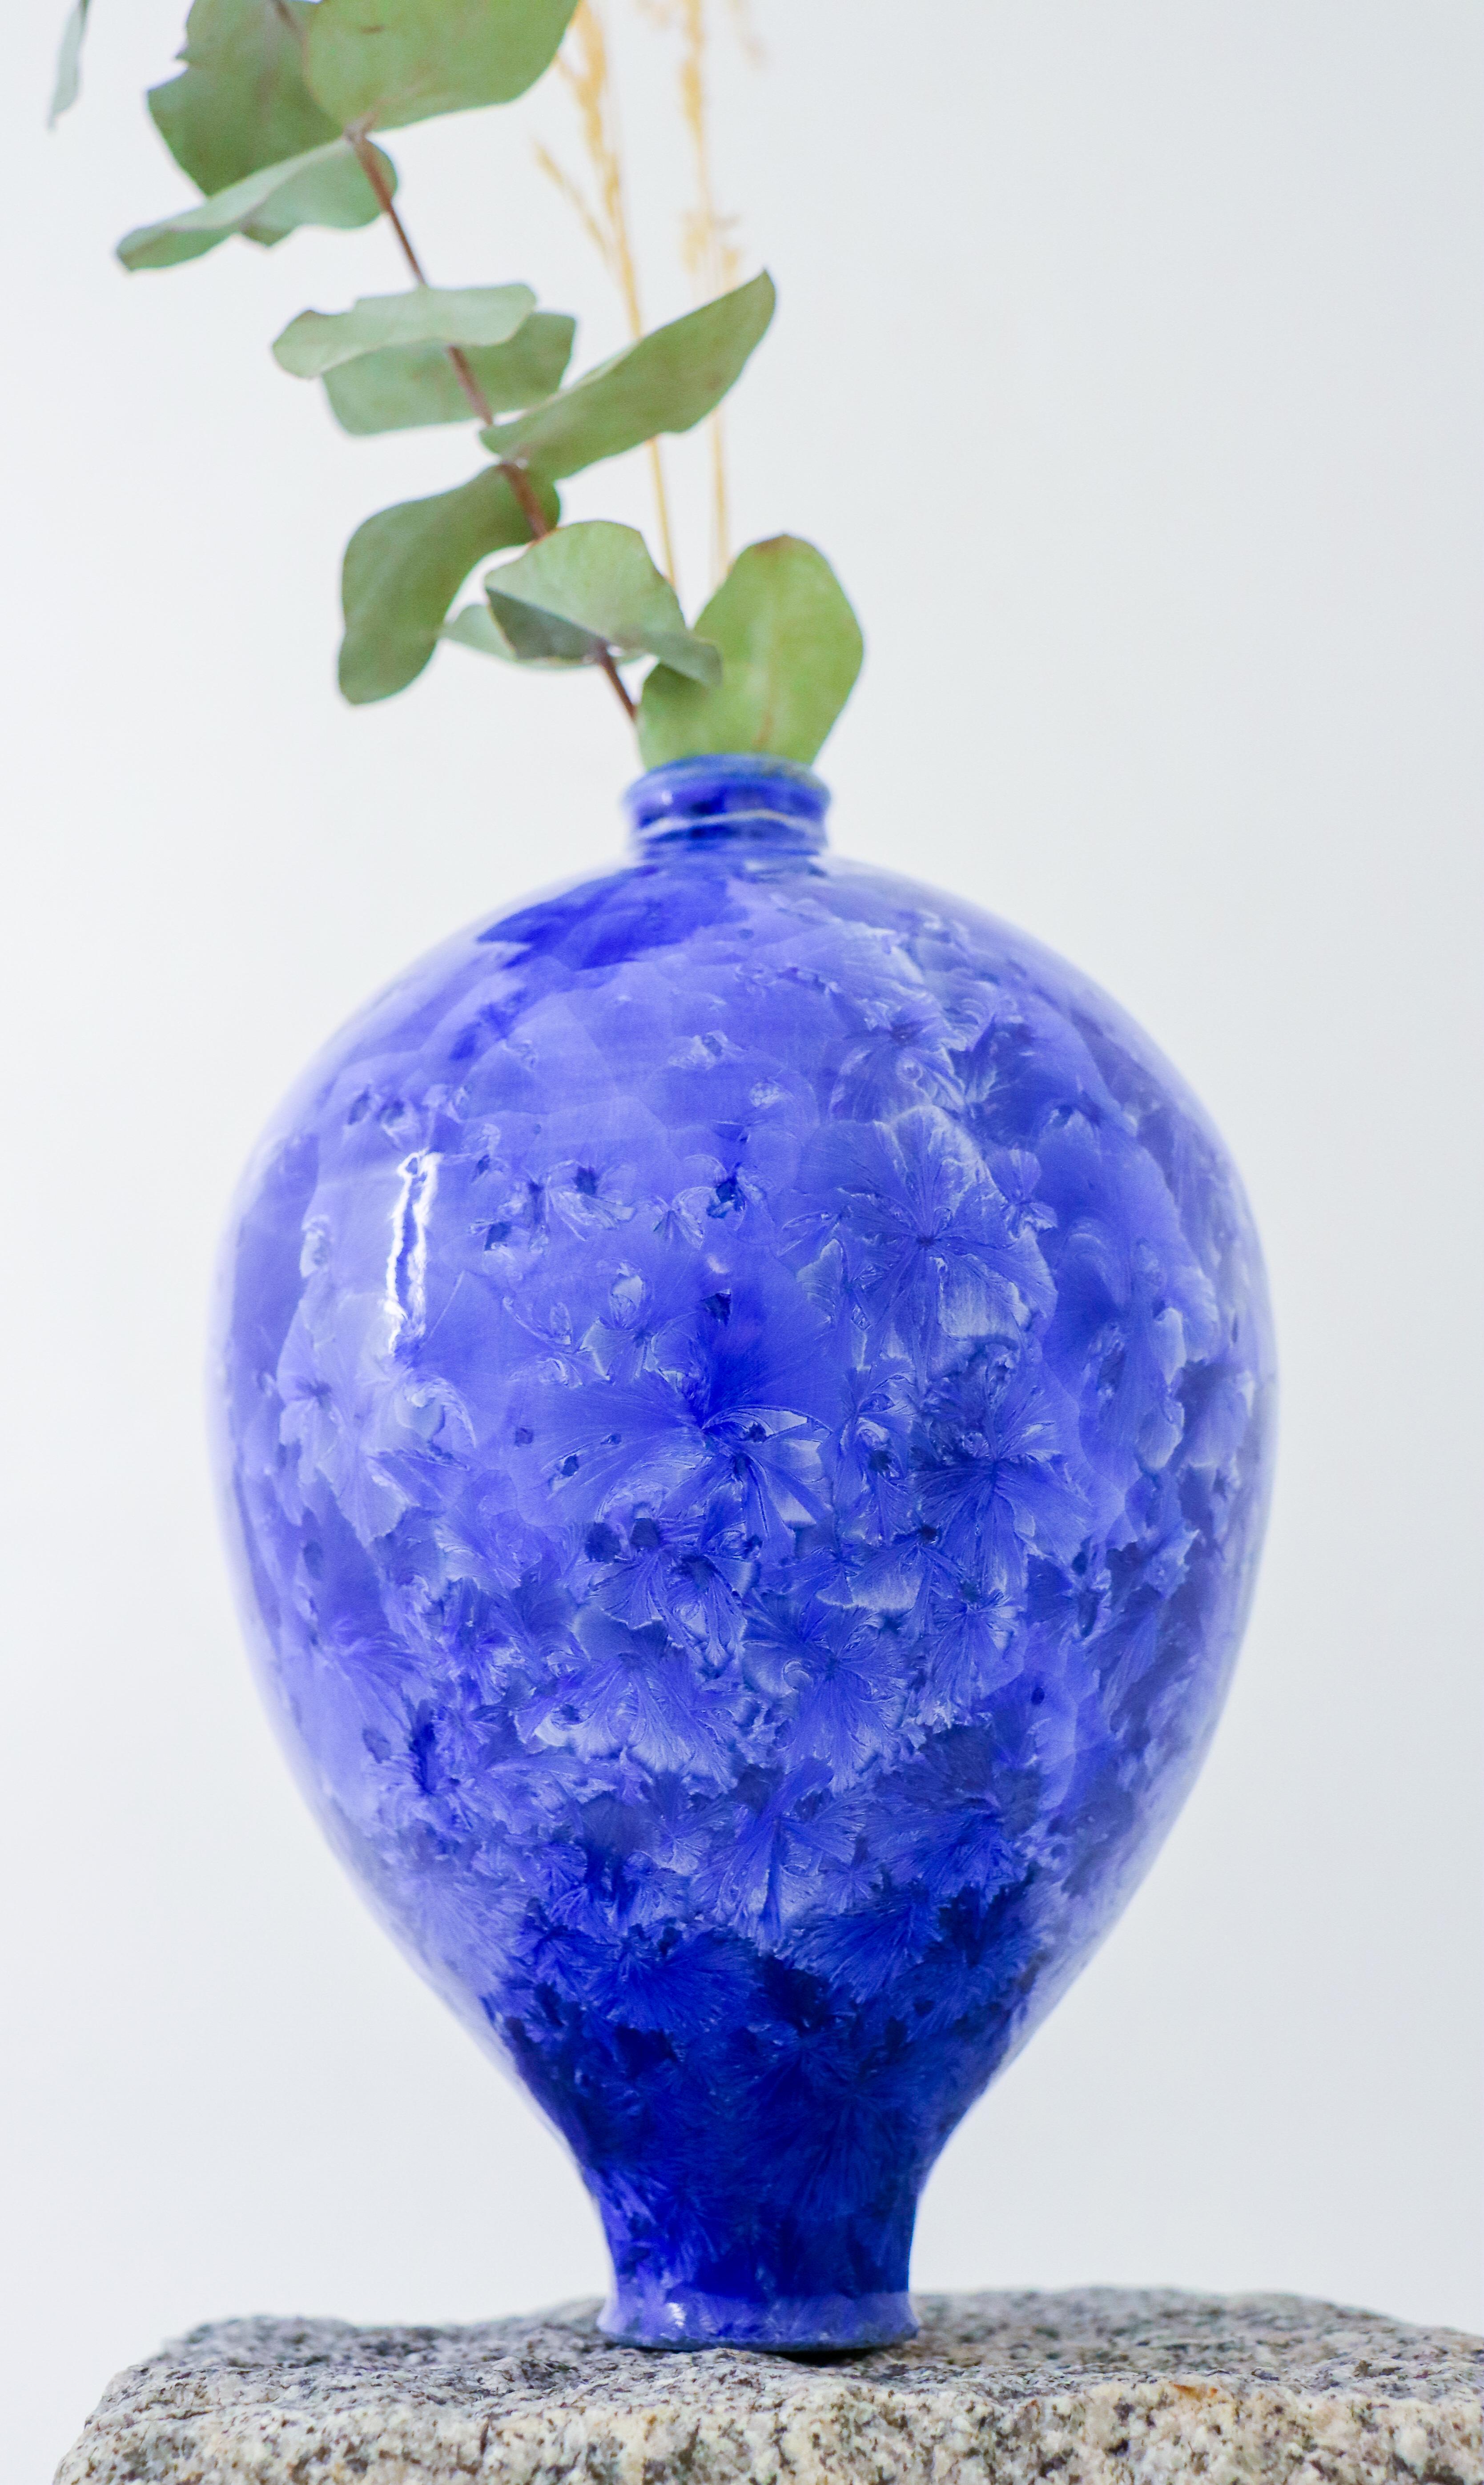 Scandinavian Modern Isak Isaksson - Blue Ceramic Vase - Crystalline Glaze - Contemporary Artist For Sale